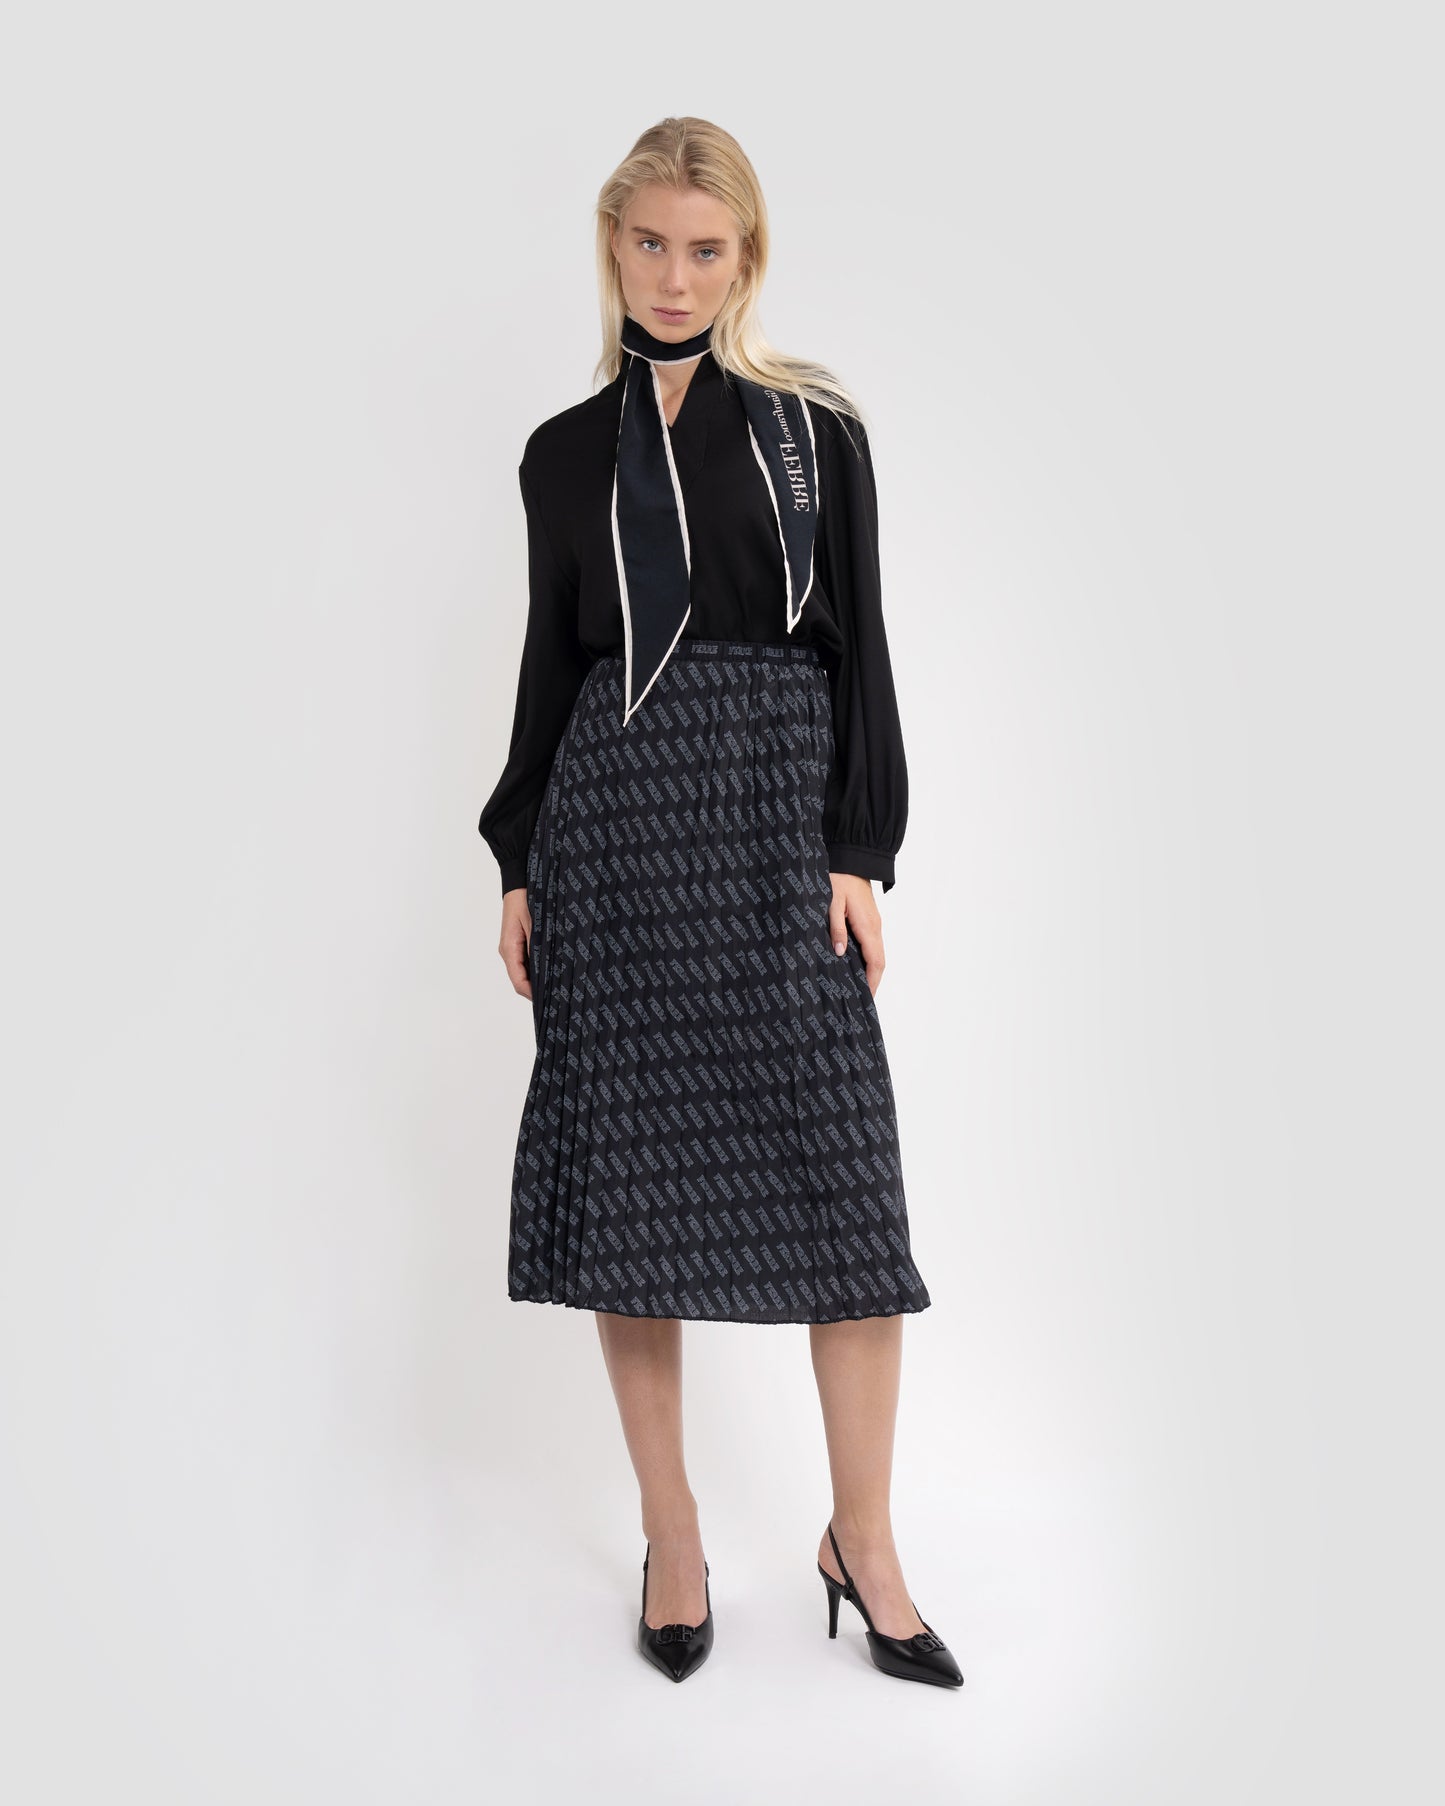 Ferré Pattern Pleated Midi Skirt